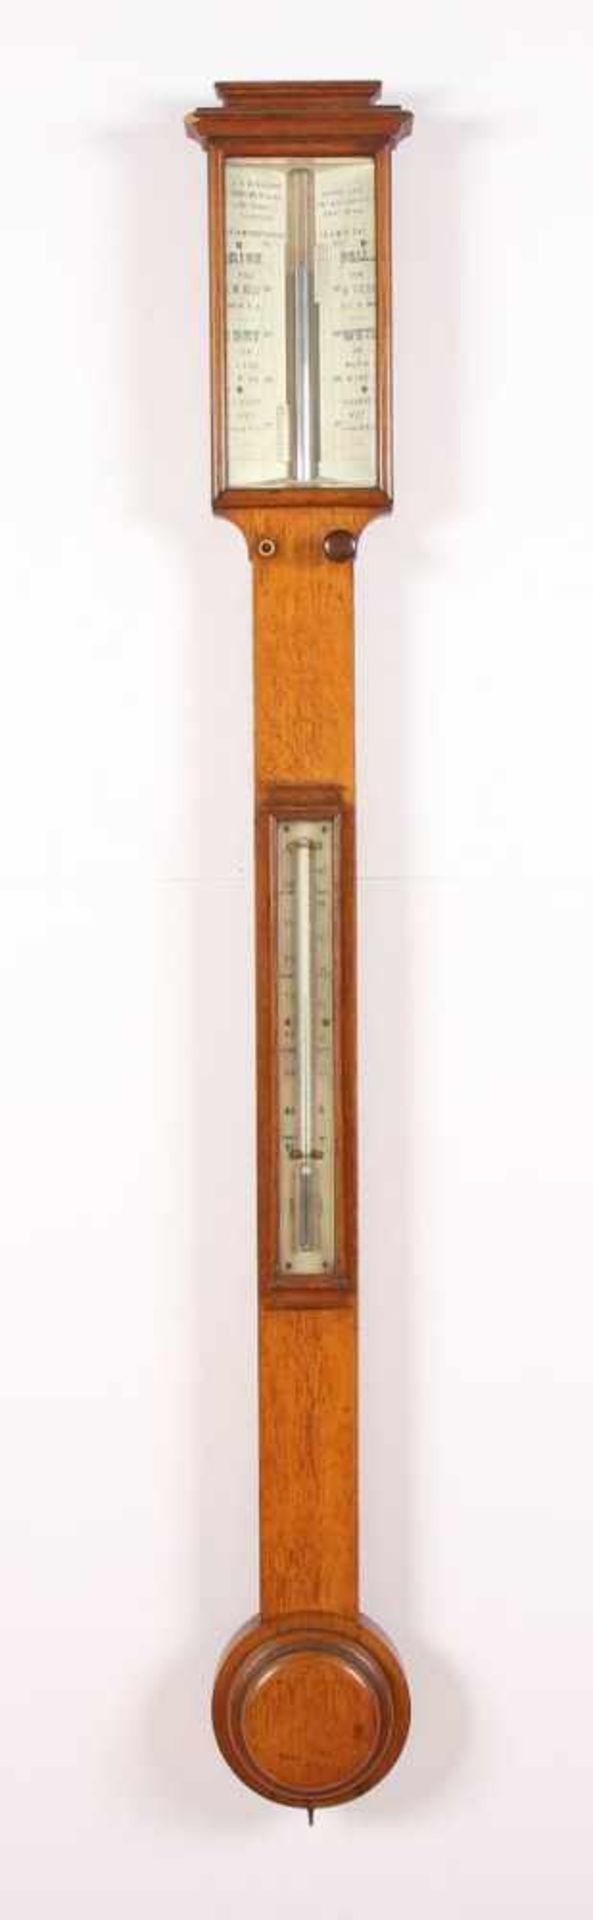 BAROMETER, Nussholzgehäuse, Quecksilbersäule, Thermometer, min.besch., L 95, J.H. STEWARD, LONDON,